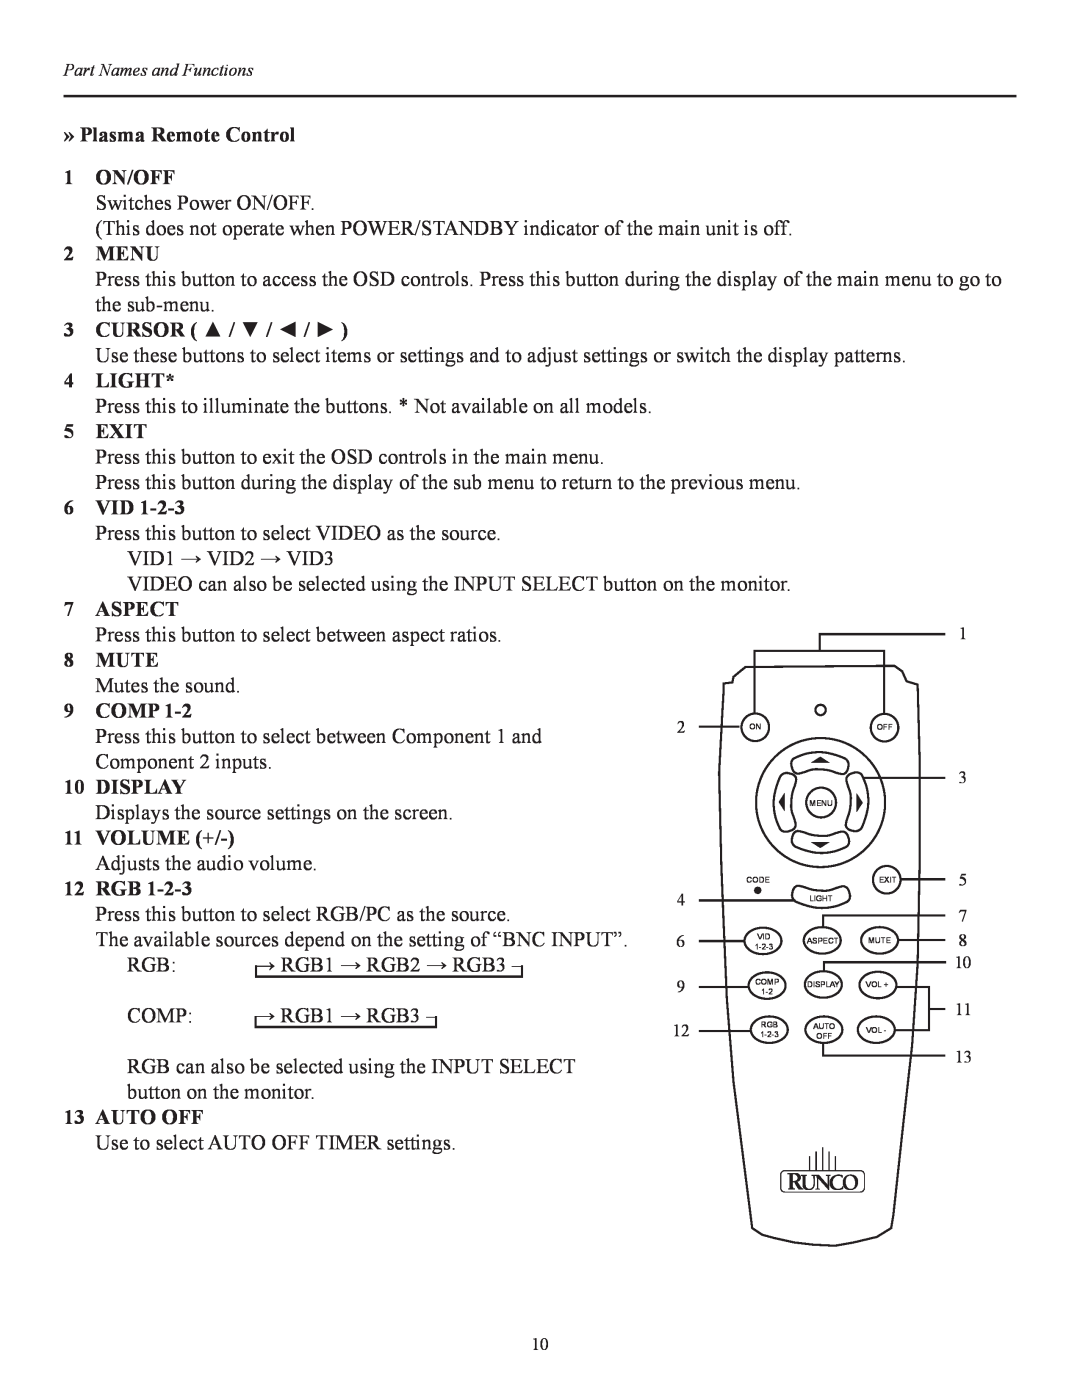 Runco CW-42i » Plasma Remote Control 1 ON/OFF, Menu, Cursor, Light, Exit, 6 VID, Aspect, Mute, Comp, Display, Volume + 